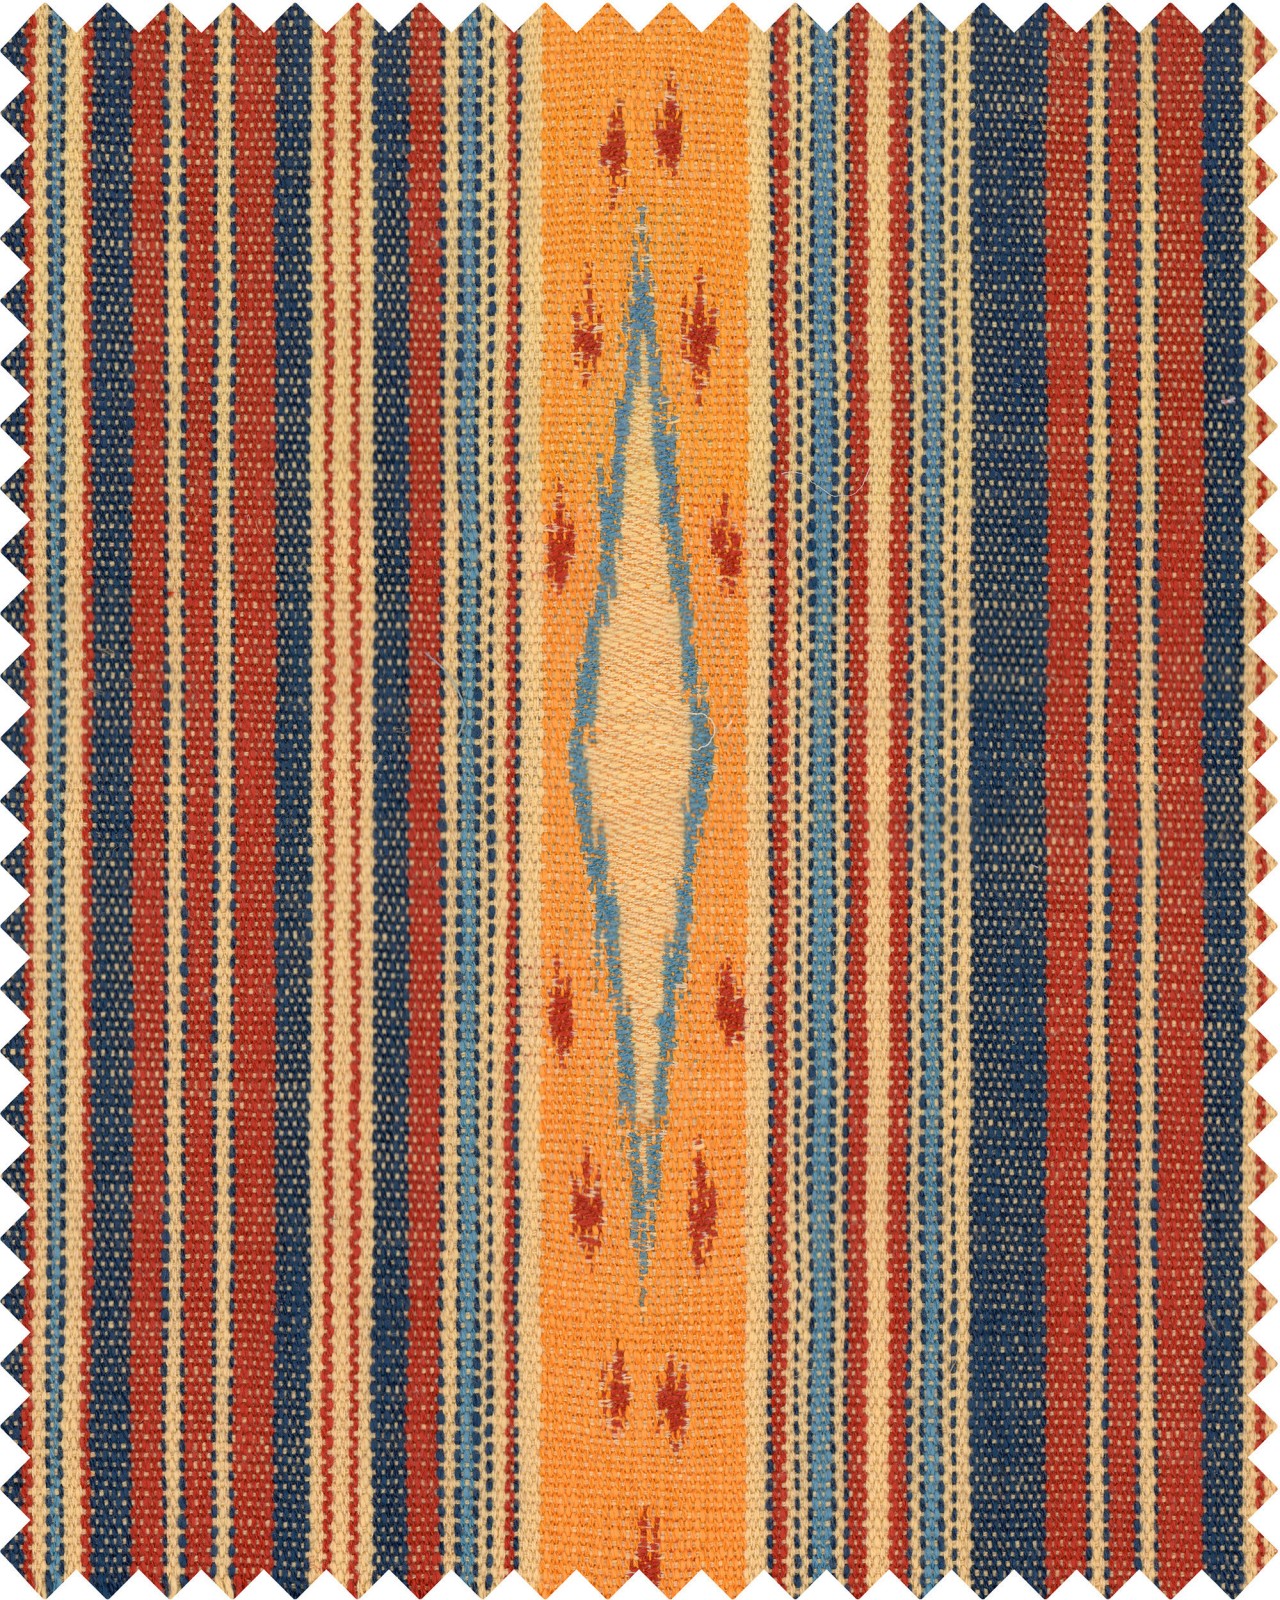 NEYSHABOUR Woven Fabric